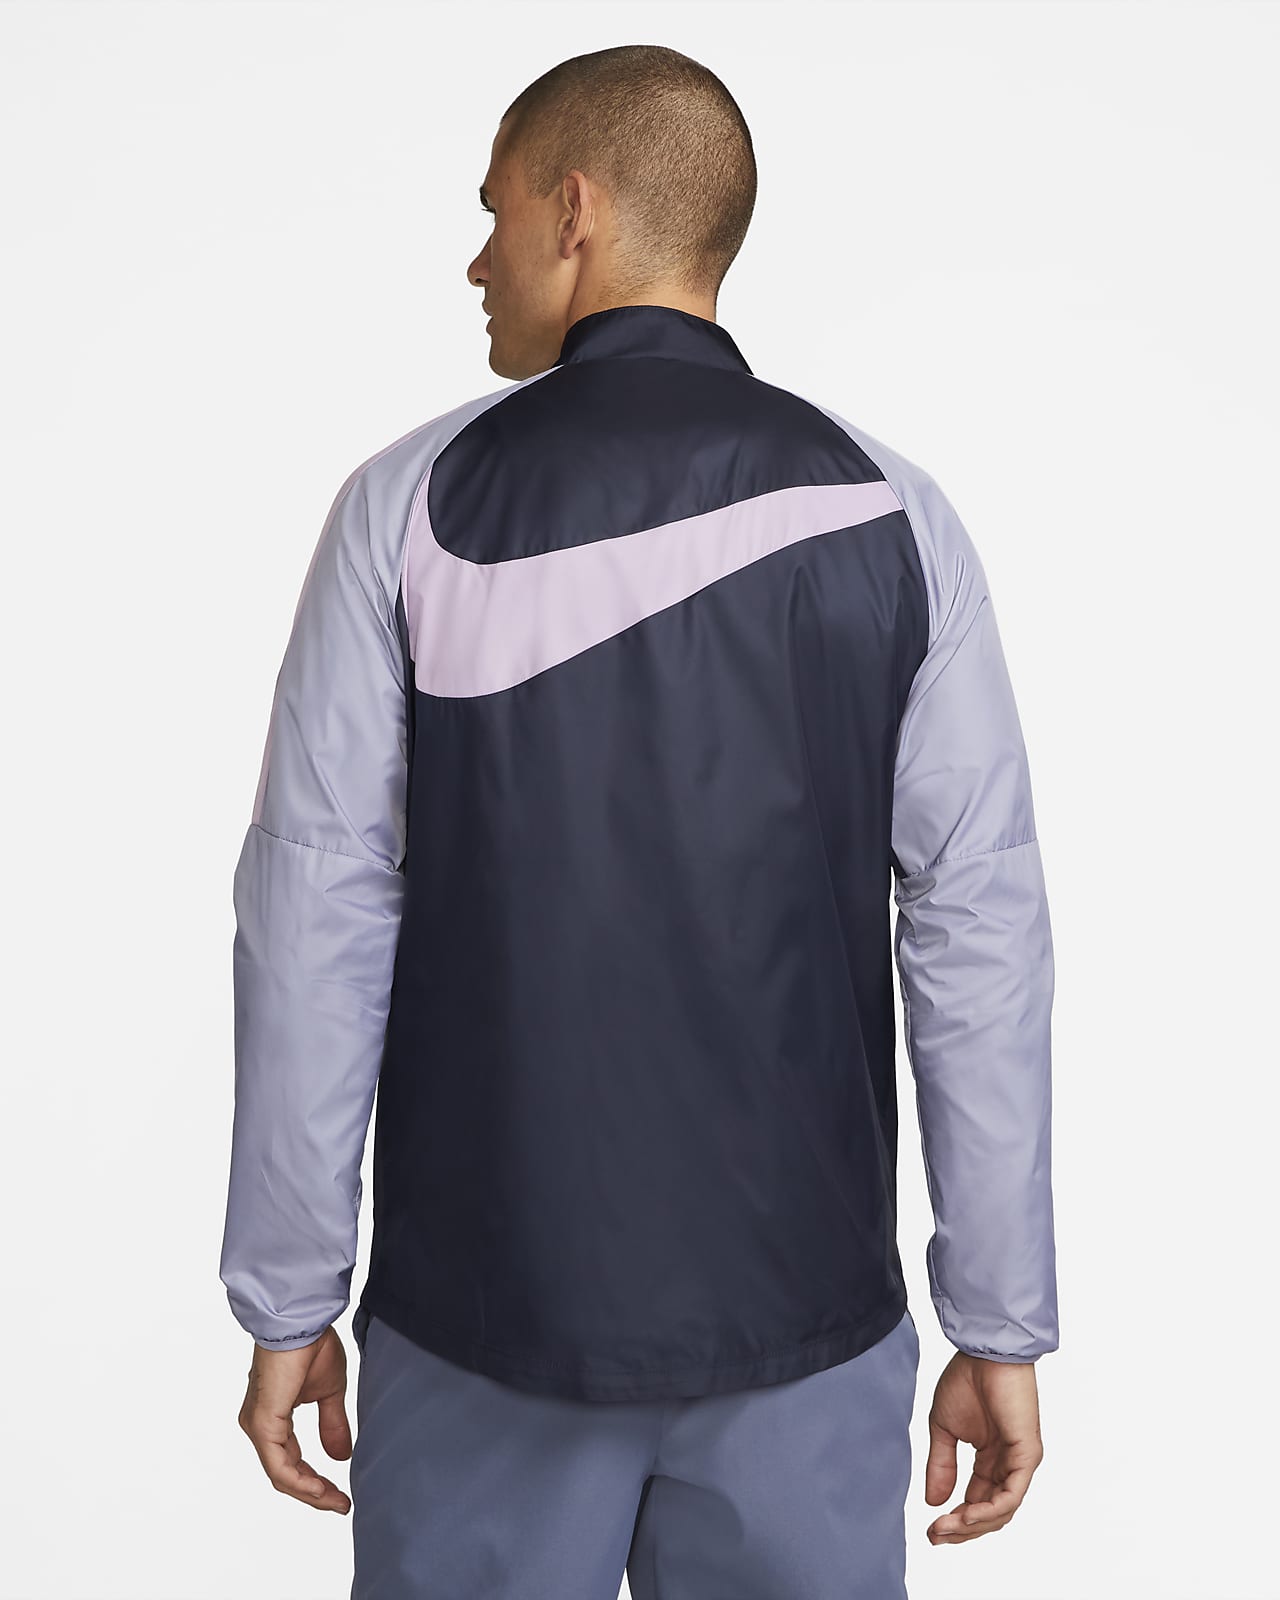 Tottenham Hotspur Academy Men's Nike Soccer Jacket.